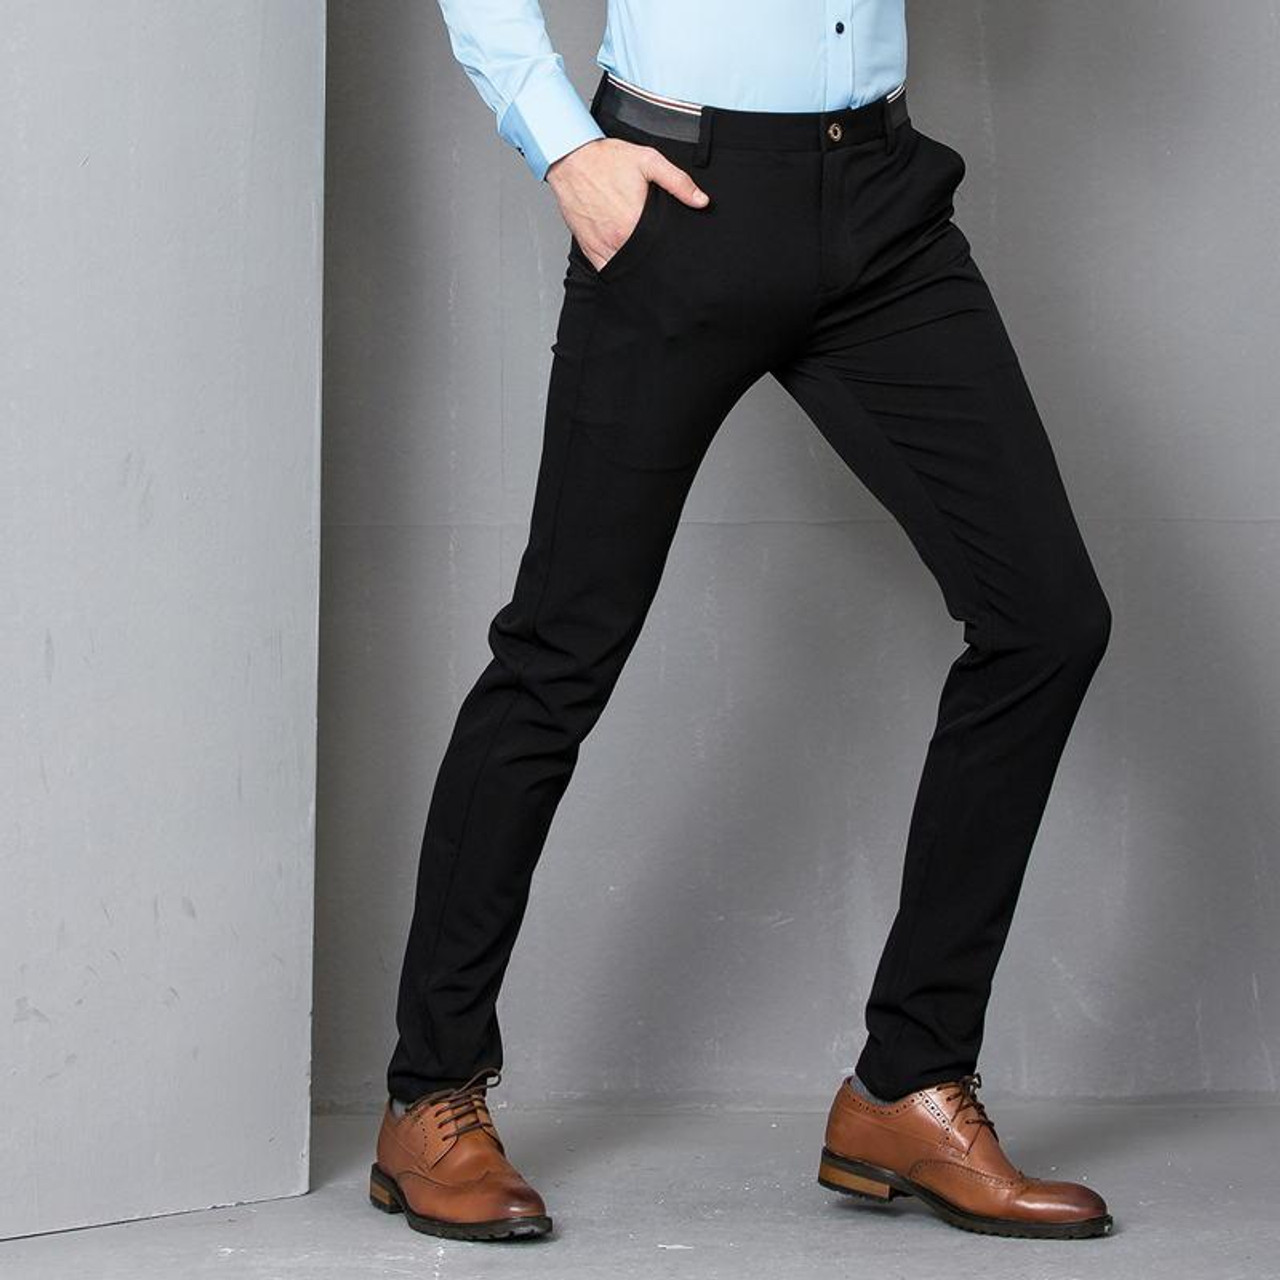 Skinny Fit Mens Trousers  Buy Skinny Fit Mens Trousers Online at Best  Prices in India  Flipkartcom